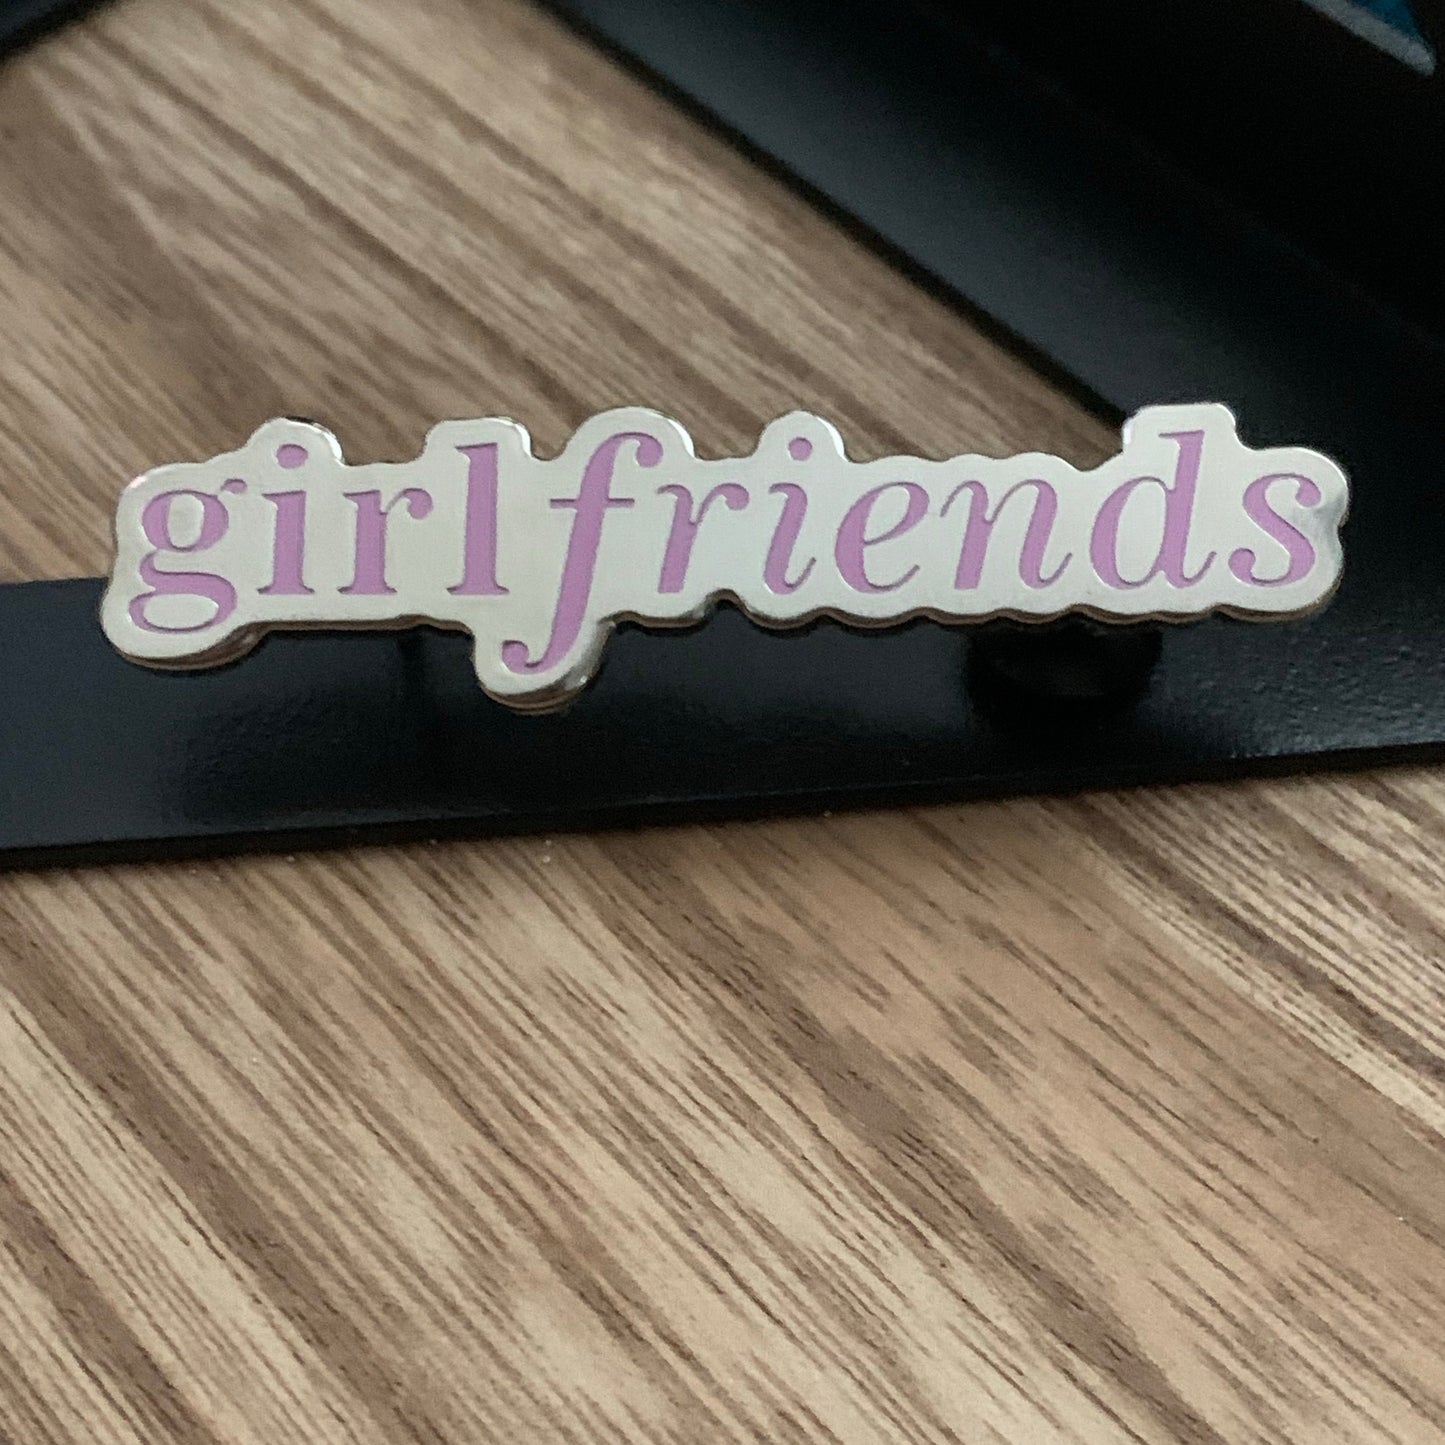 Girlfriends Pin